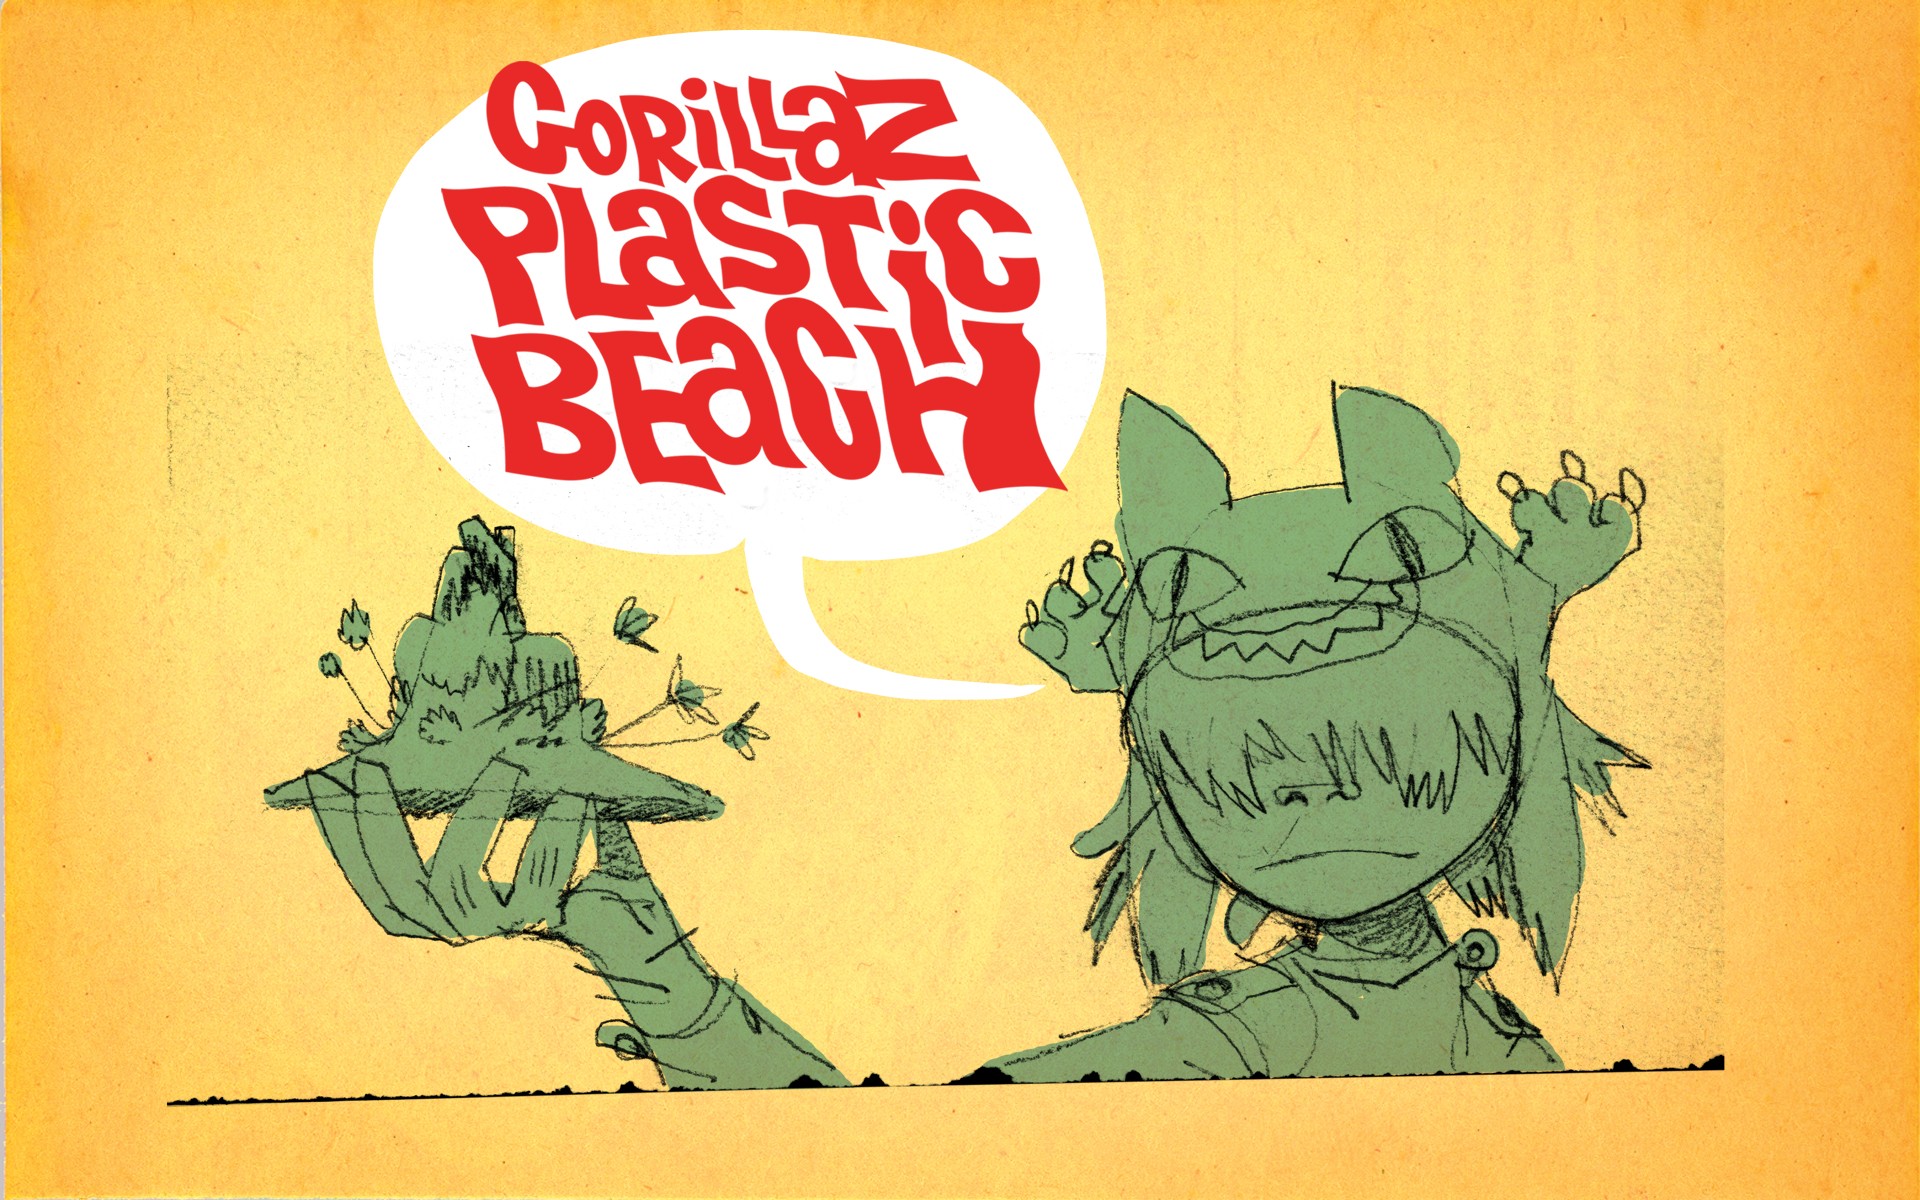 General 1920x1200 Plastic Beach Gorillaz artwork music band